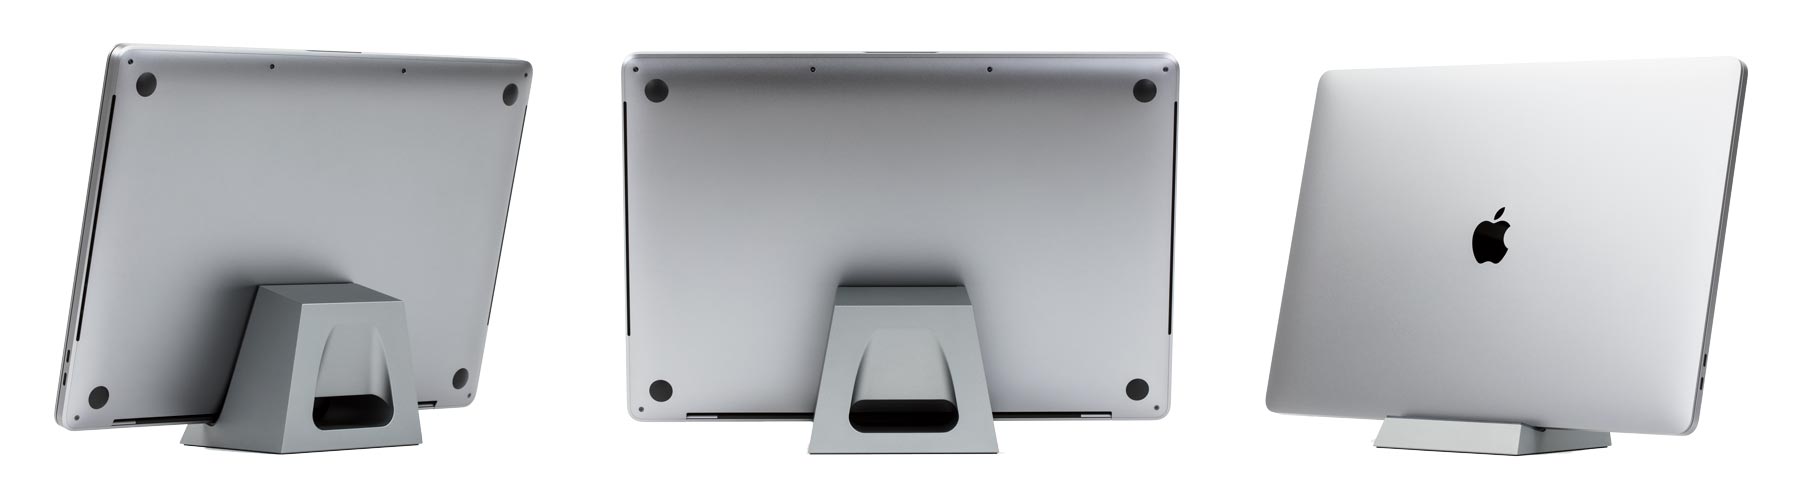 SVALT Cooling Stand model Dock model D with 16-inch MacBook Pro